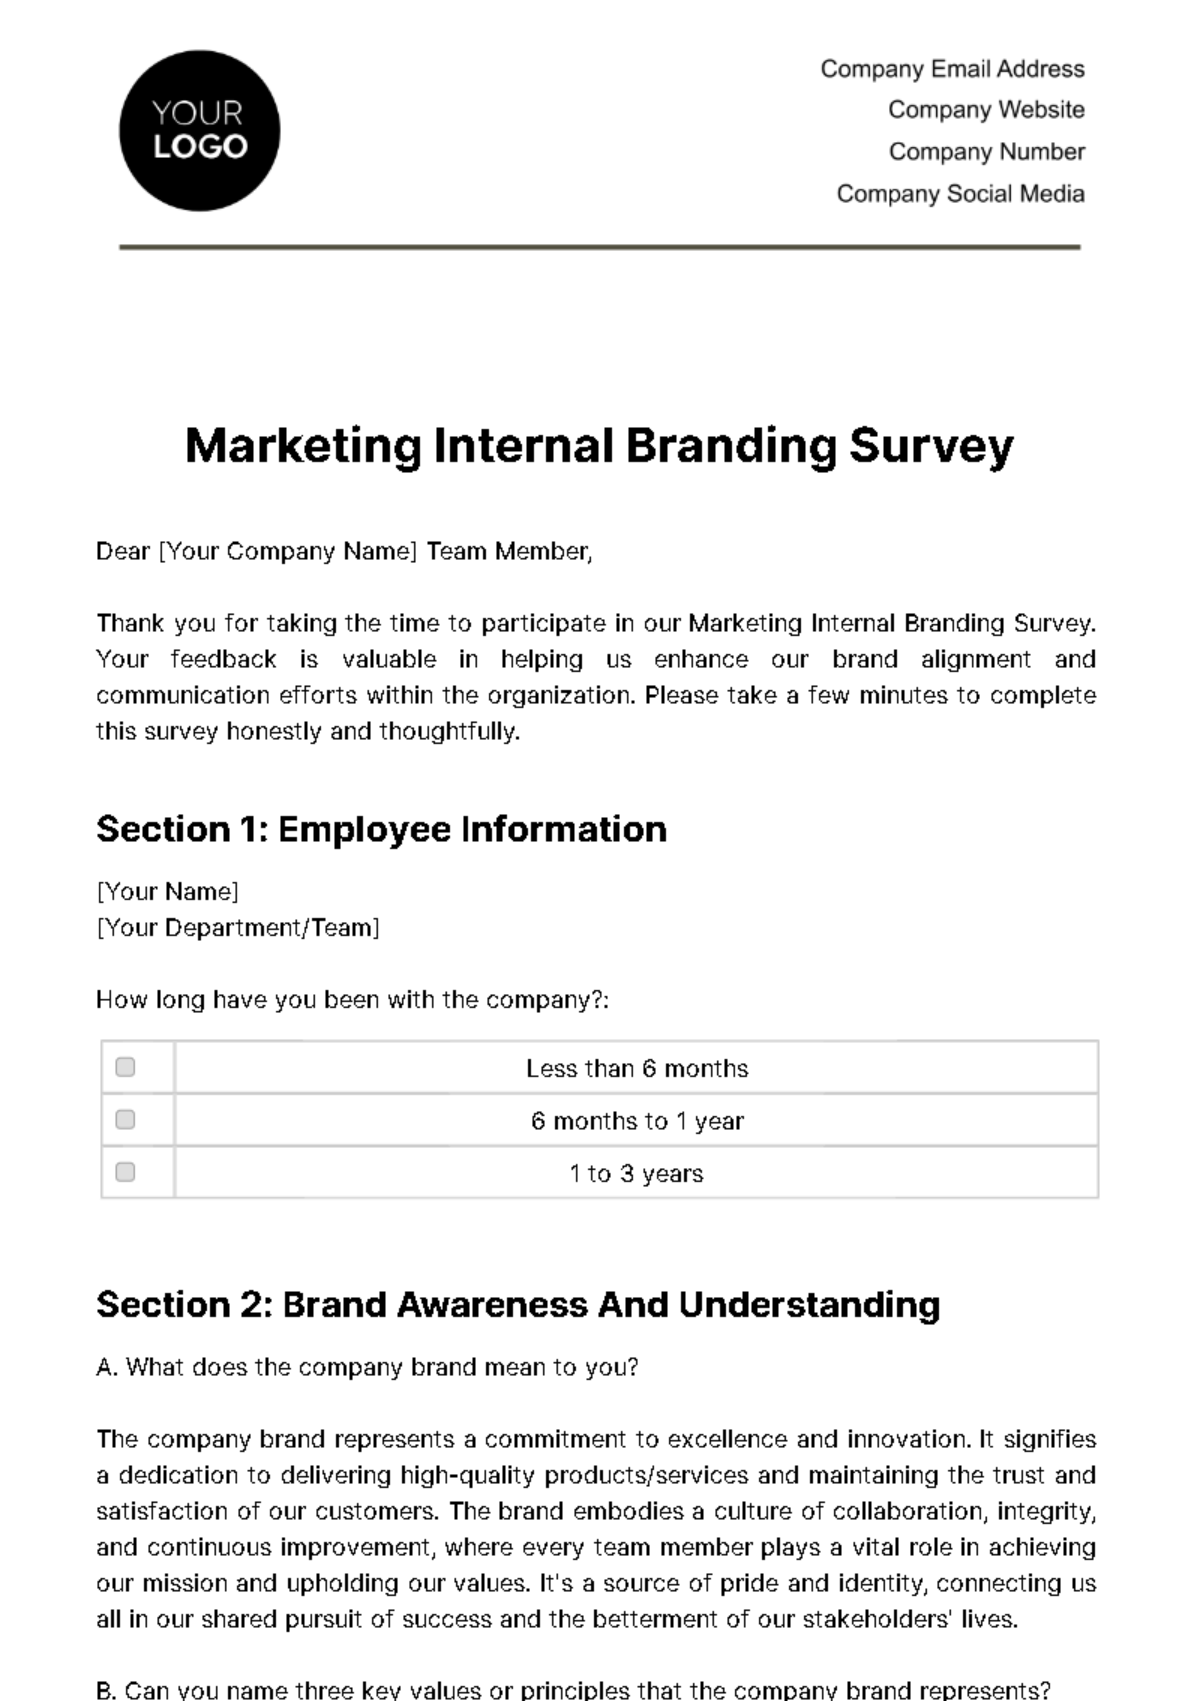 Marketing Internal Branding Survey Template